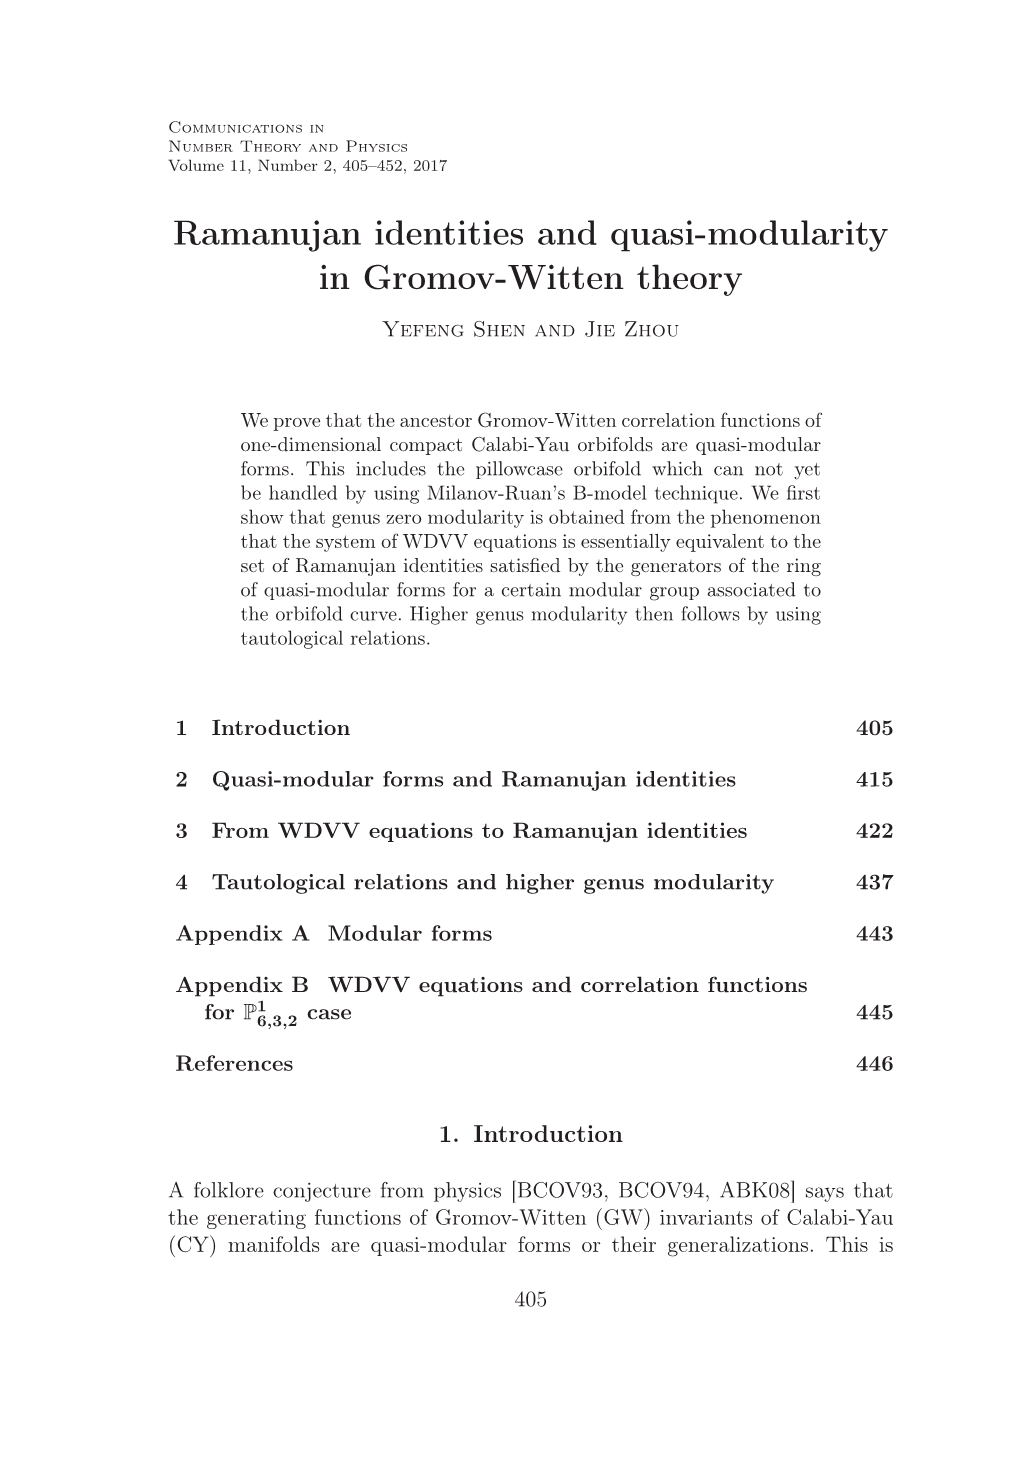 Ramanujan Identities and Quasi-Modularity in Gromov-Witten Theory